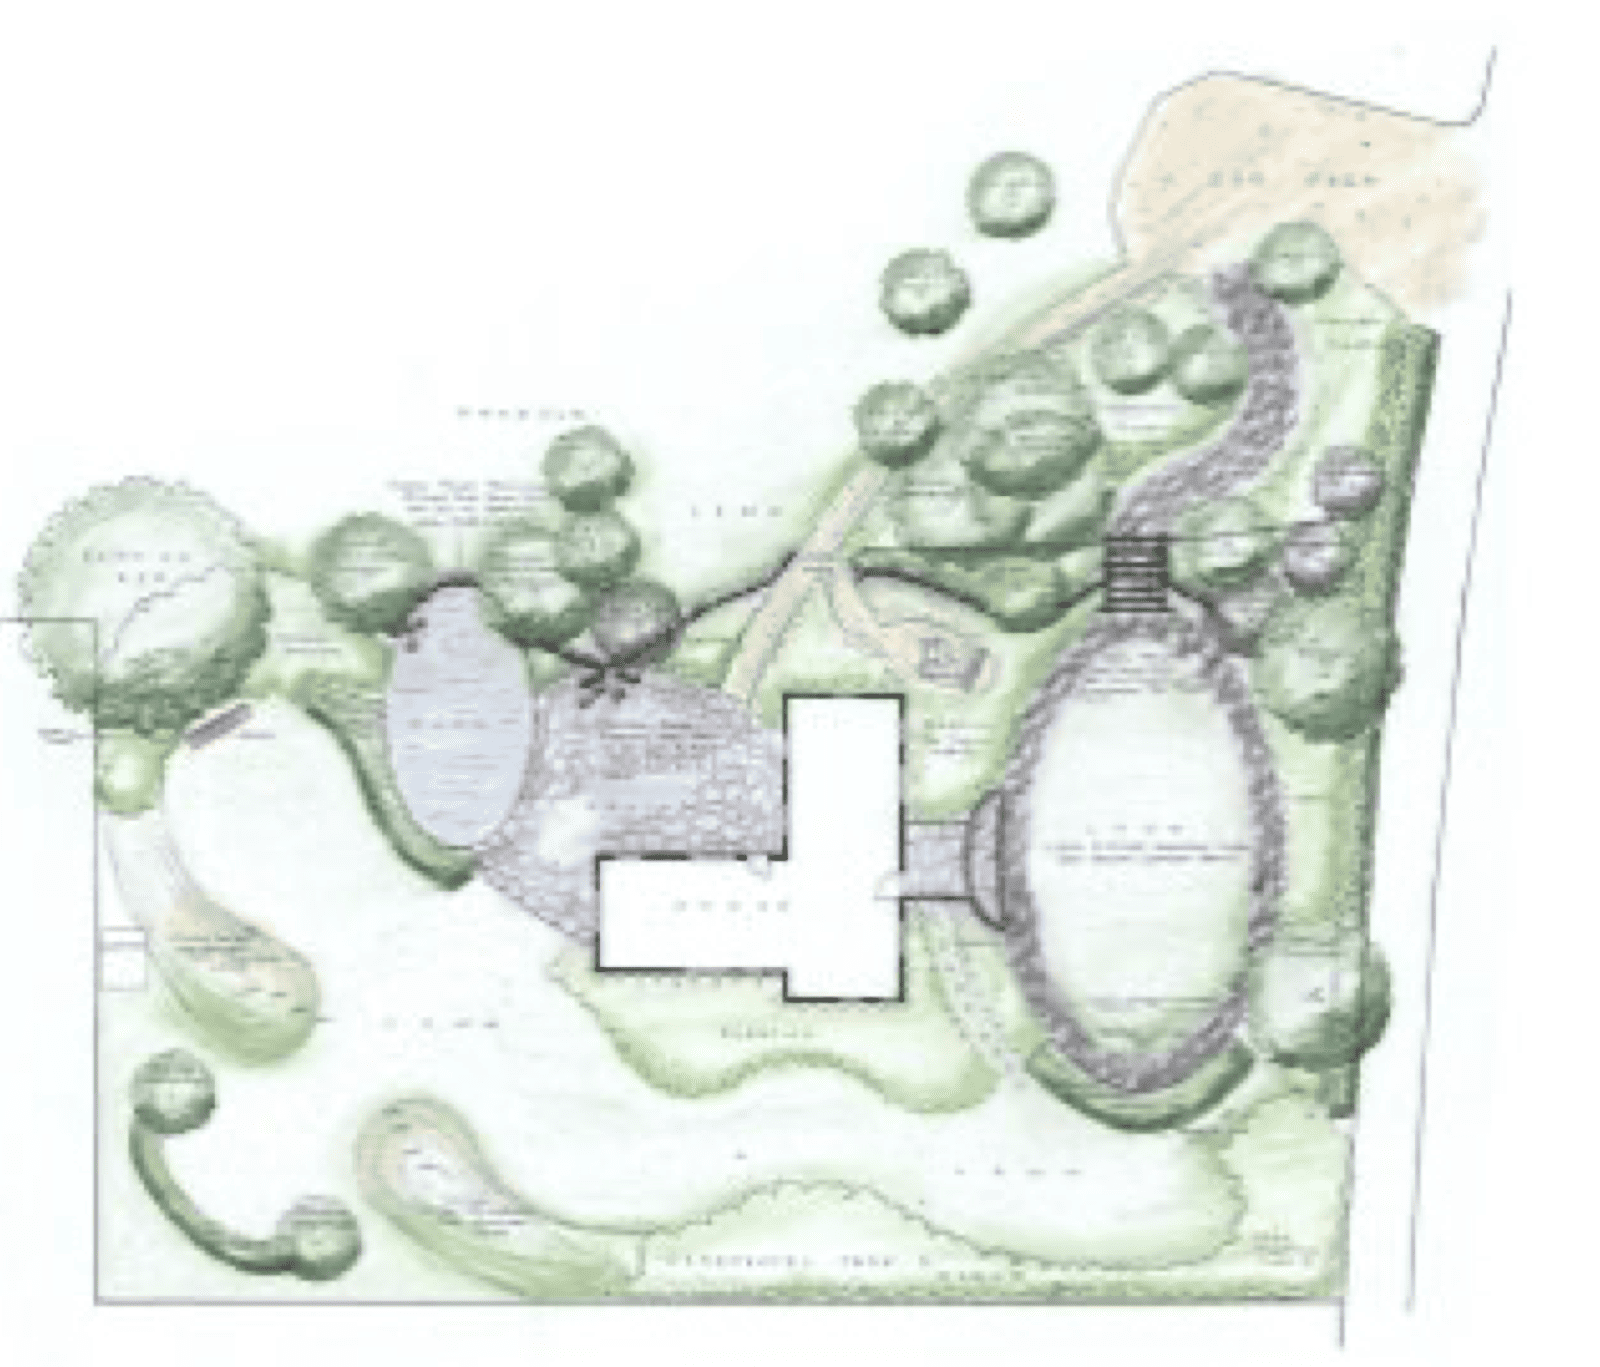 a masterplan layout for a garden